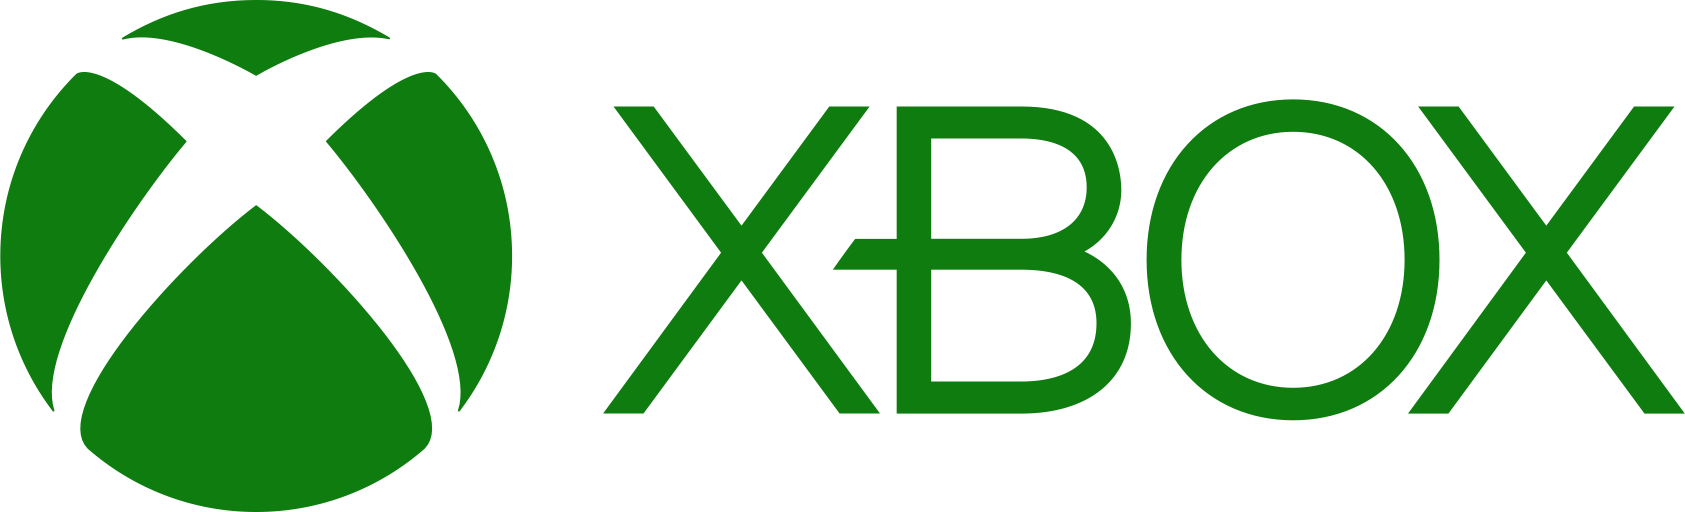 Xbox Logo Transparent Png   Pluspng - Xbox, Transparent background PNG HD thumbnail